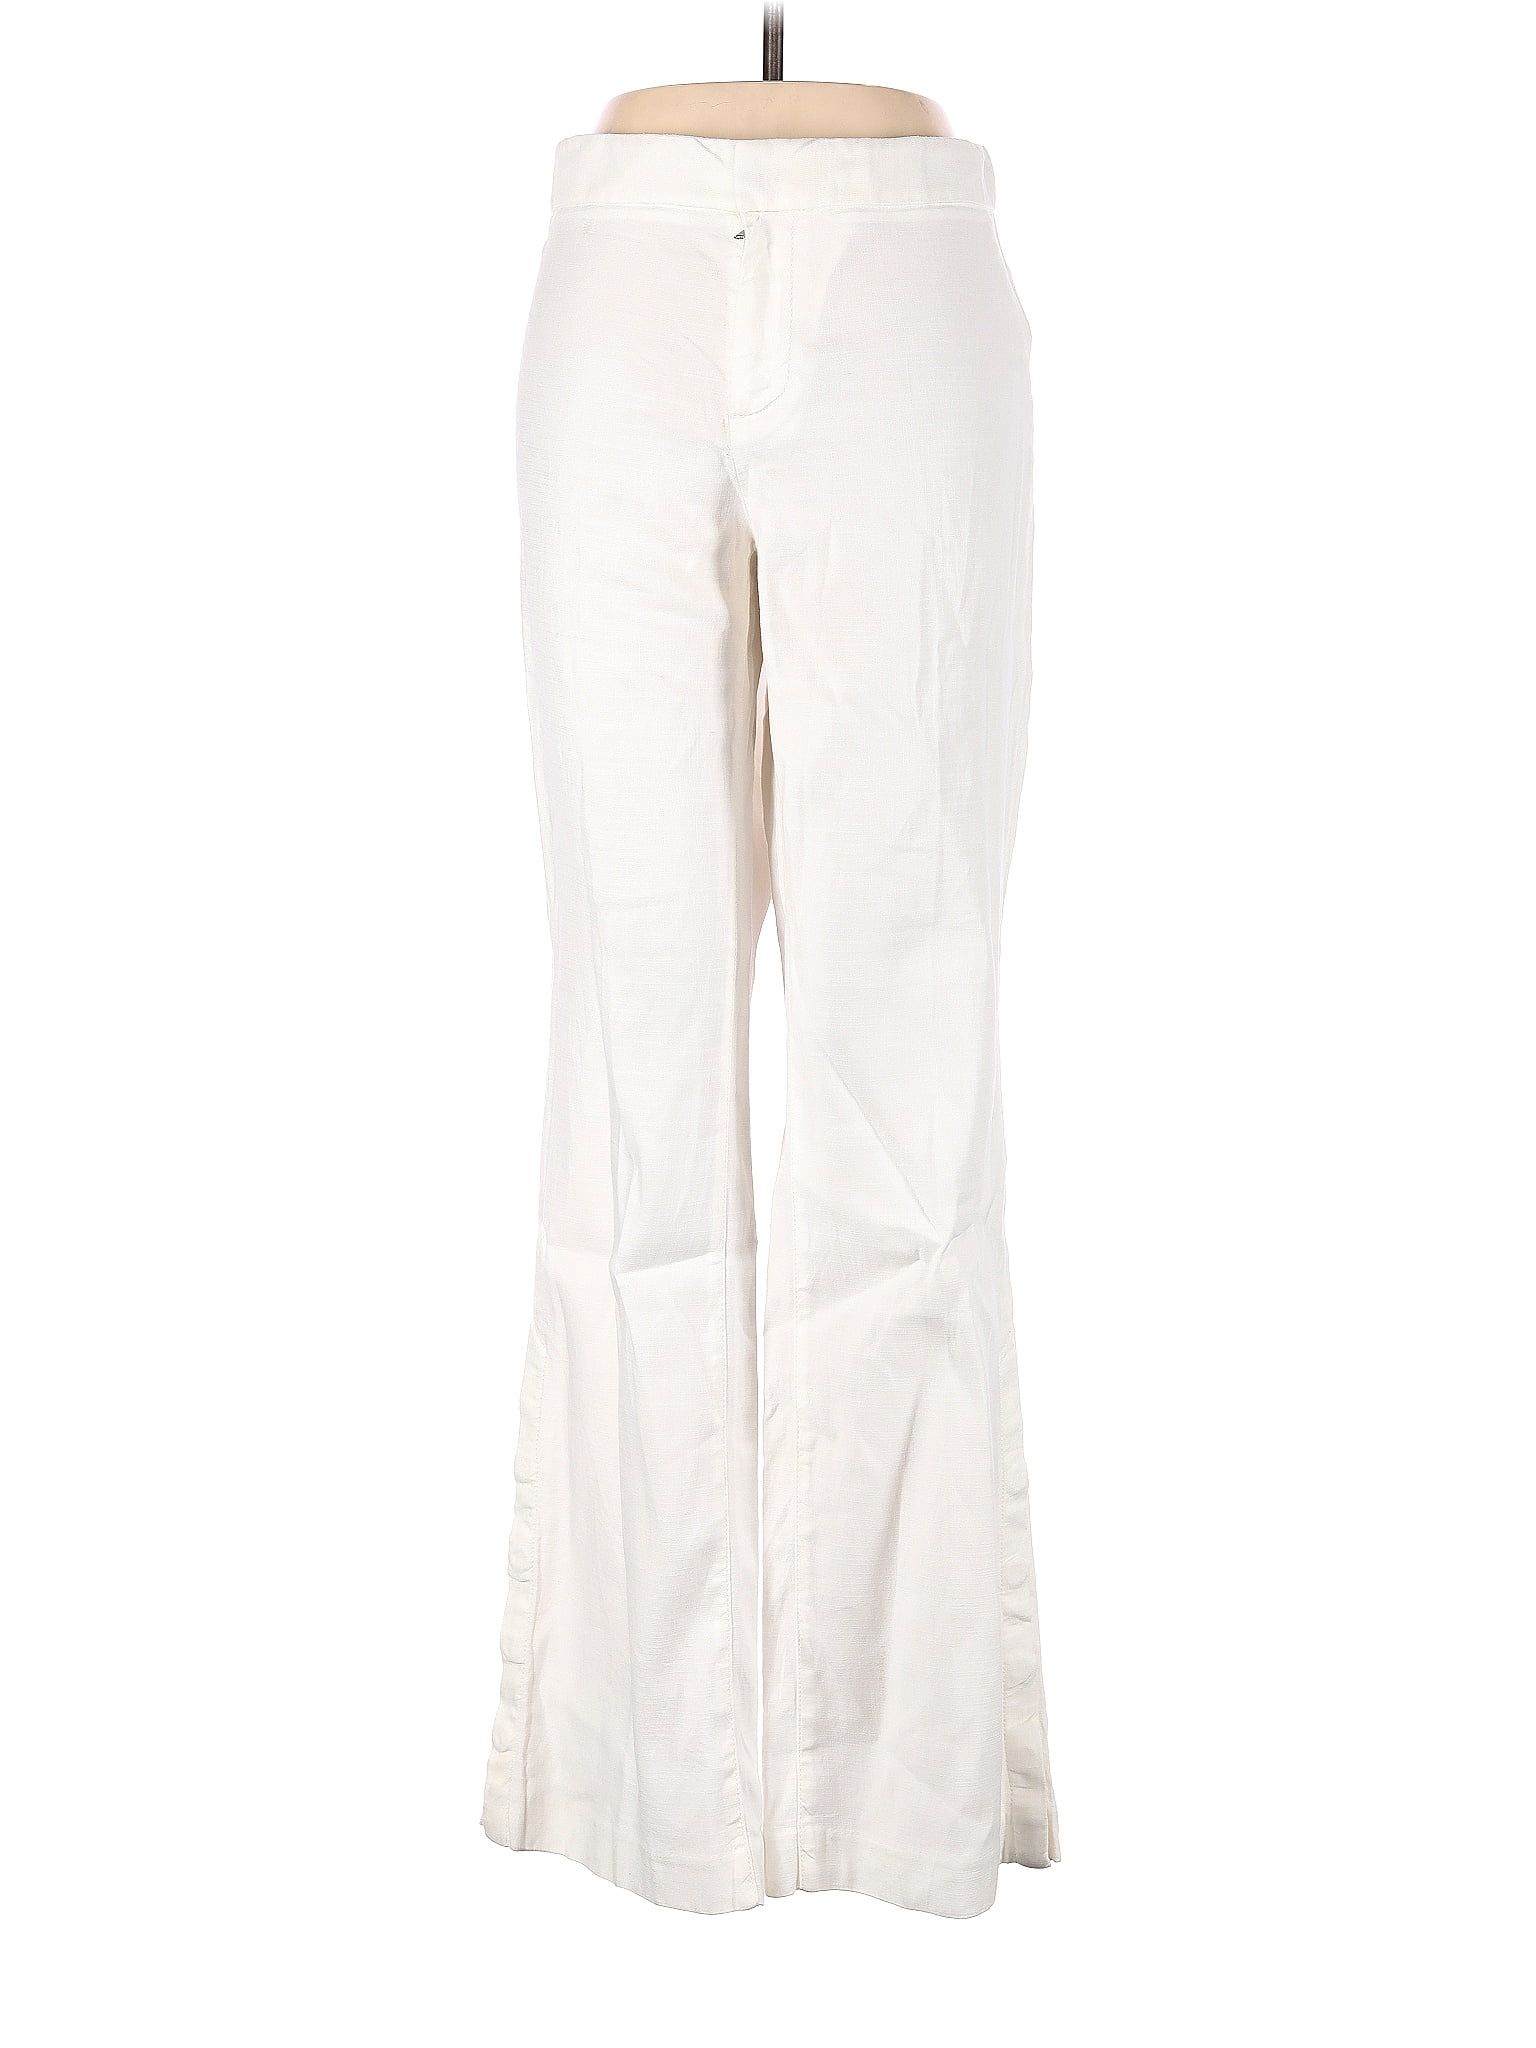 Ecru Solid White Ivory Linen Pants Size 8 - 80% off | thredUP